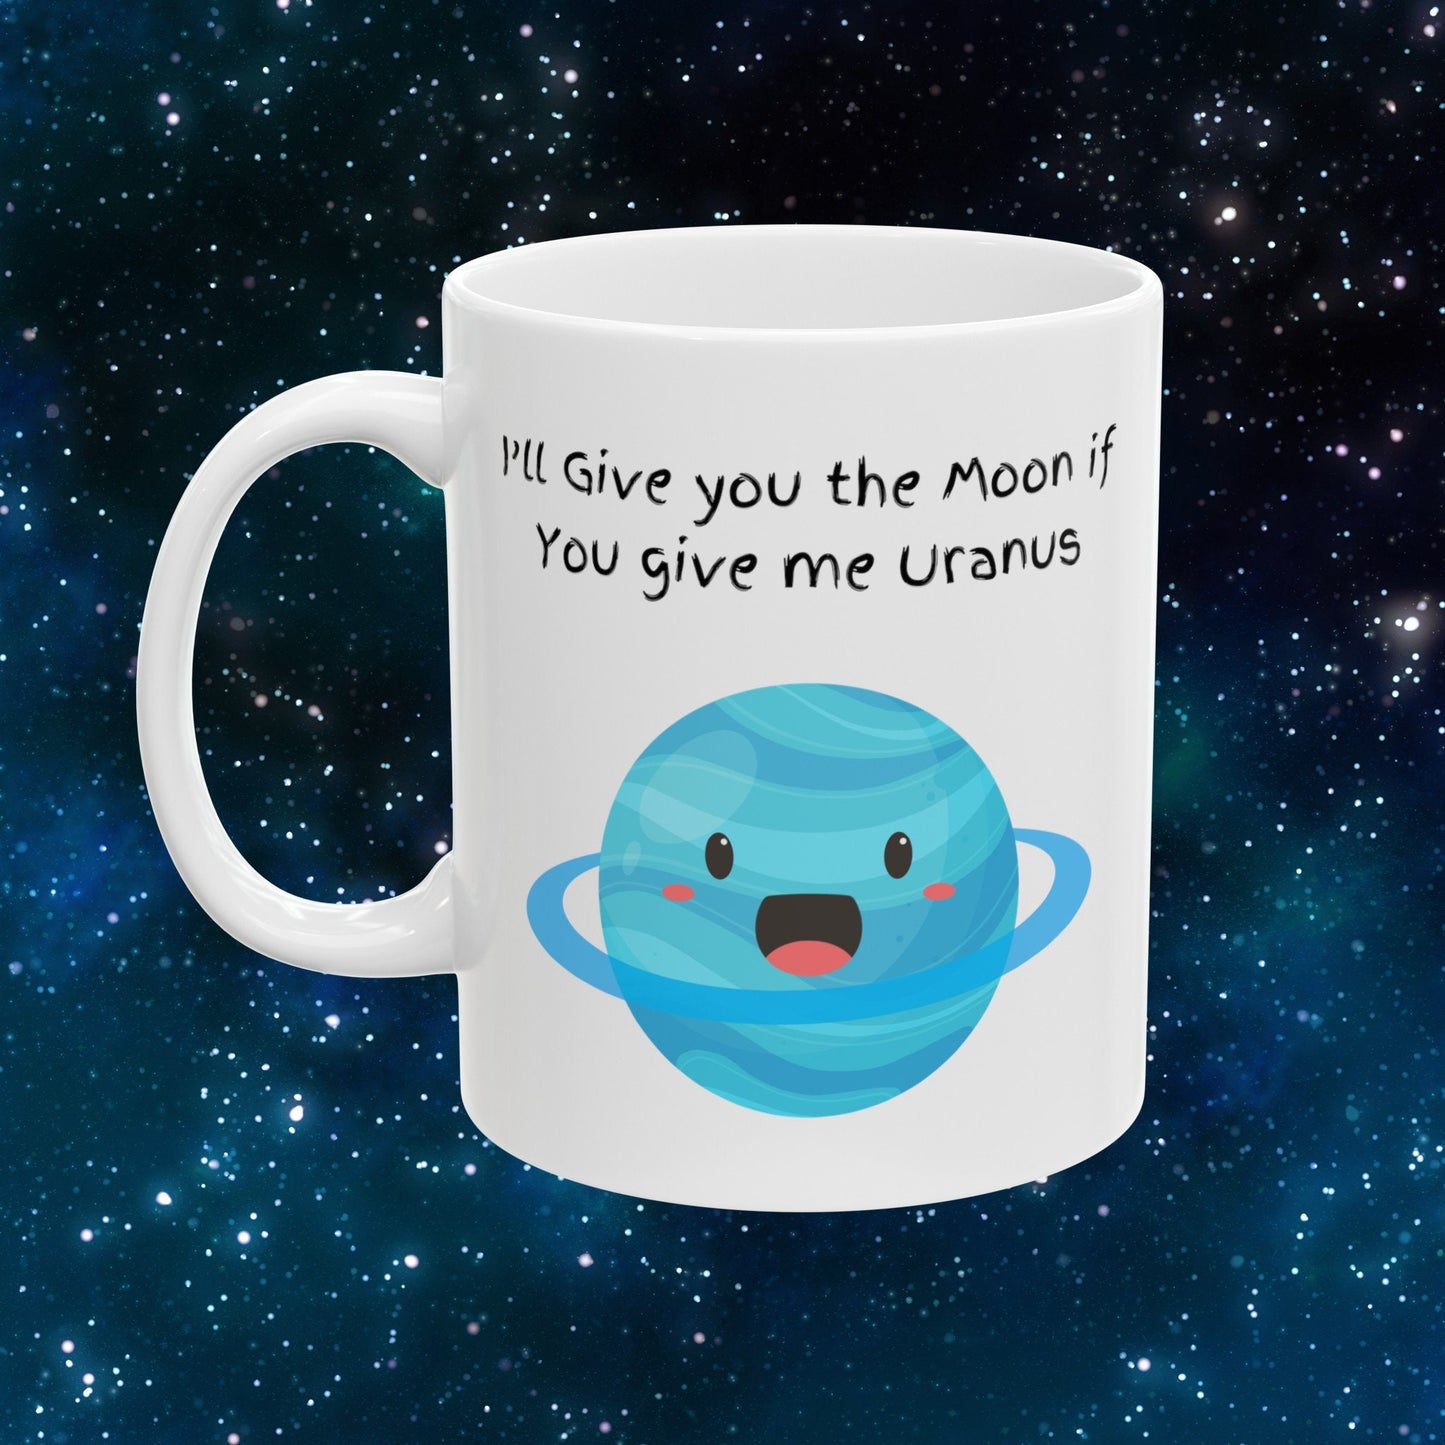 Give me Uranus Coffee Mug, Uranus Mug, Cute Uranus Planet Mug, Funny Mug from Uranus, Drink from Uranus, Uranus Ceramic Mug,